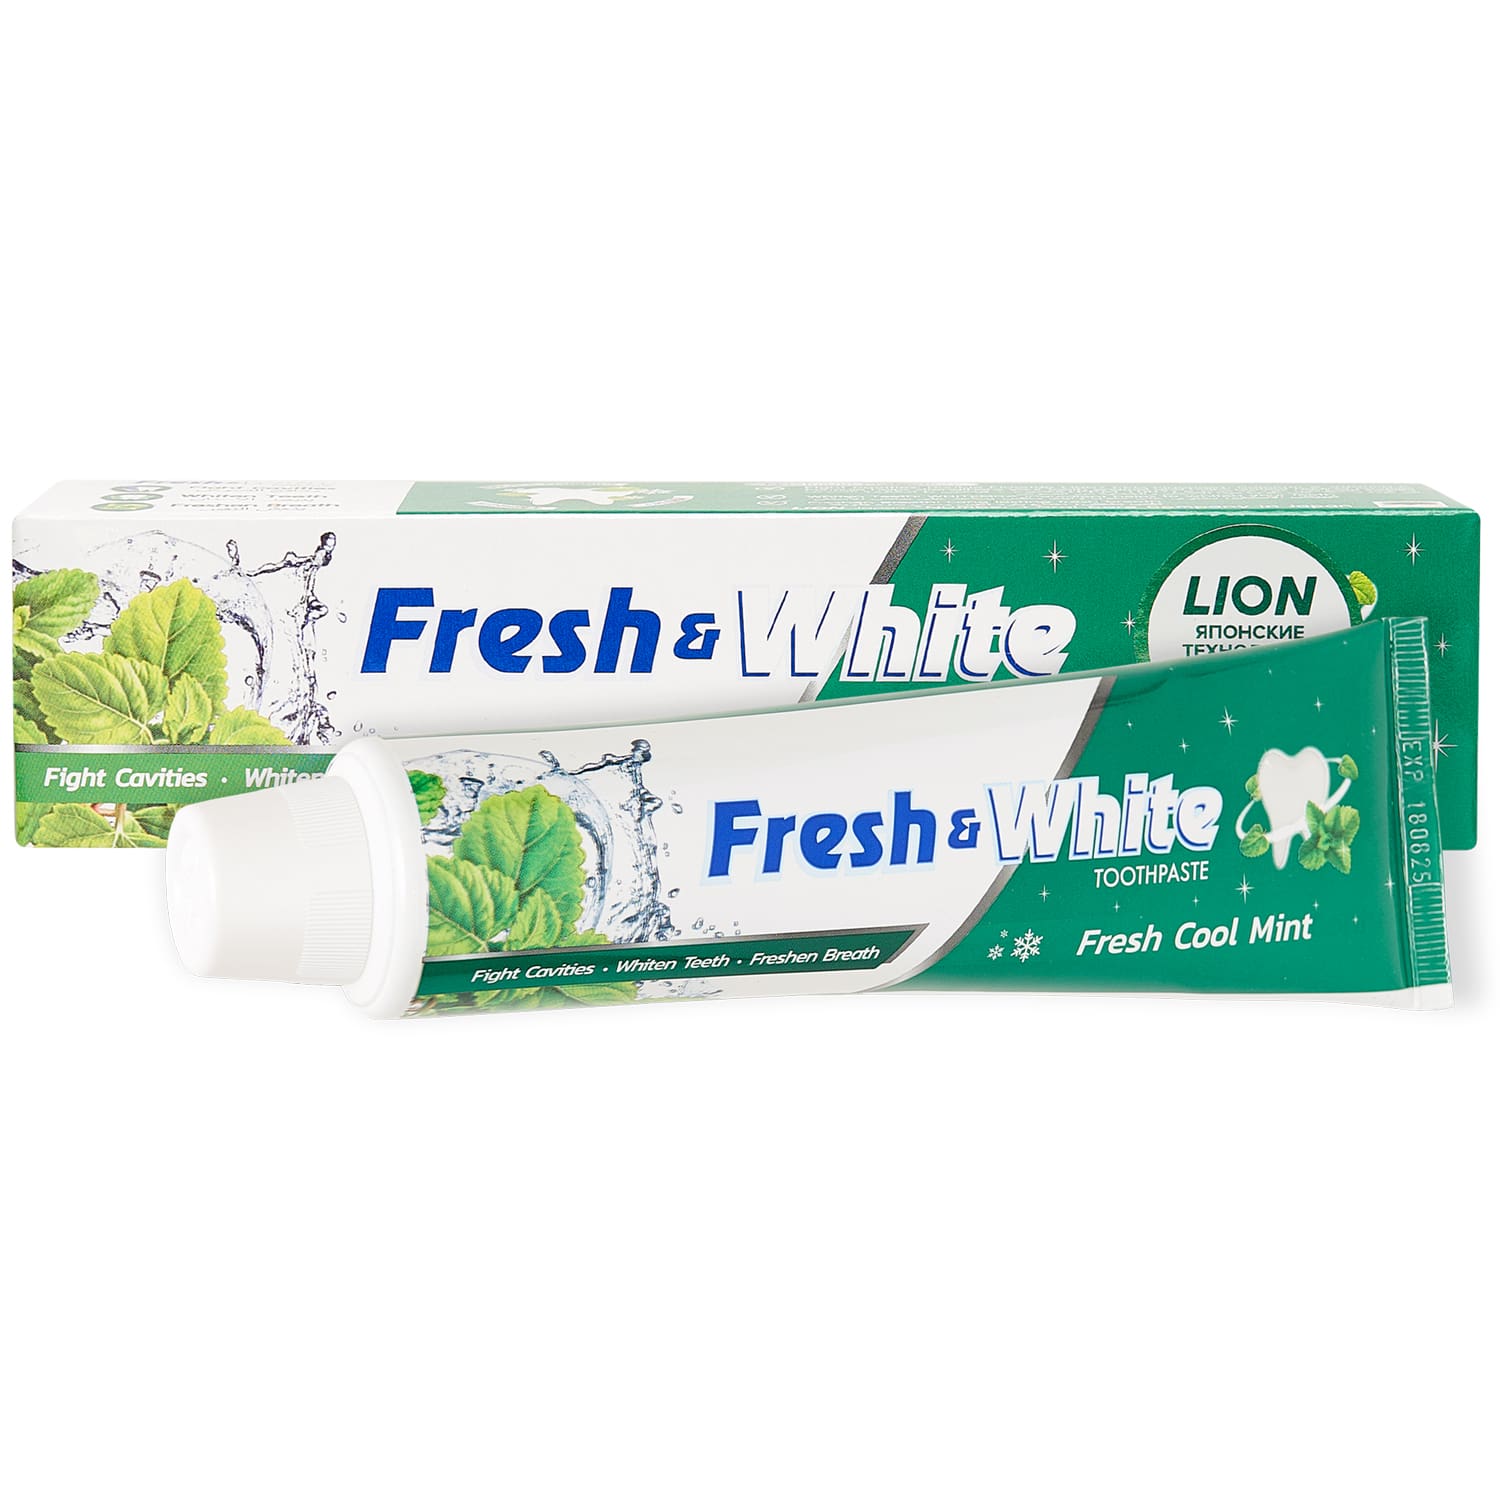 Lion Thailand Зубная паста для защиты от кариеса Прохладная мята, 160 г (Lion Thailand, Fresh & White) уход за полостью рта жемчужная prof зубная паста реминерализующая